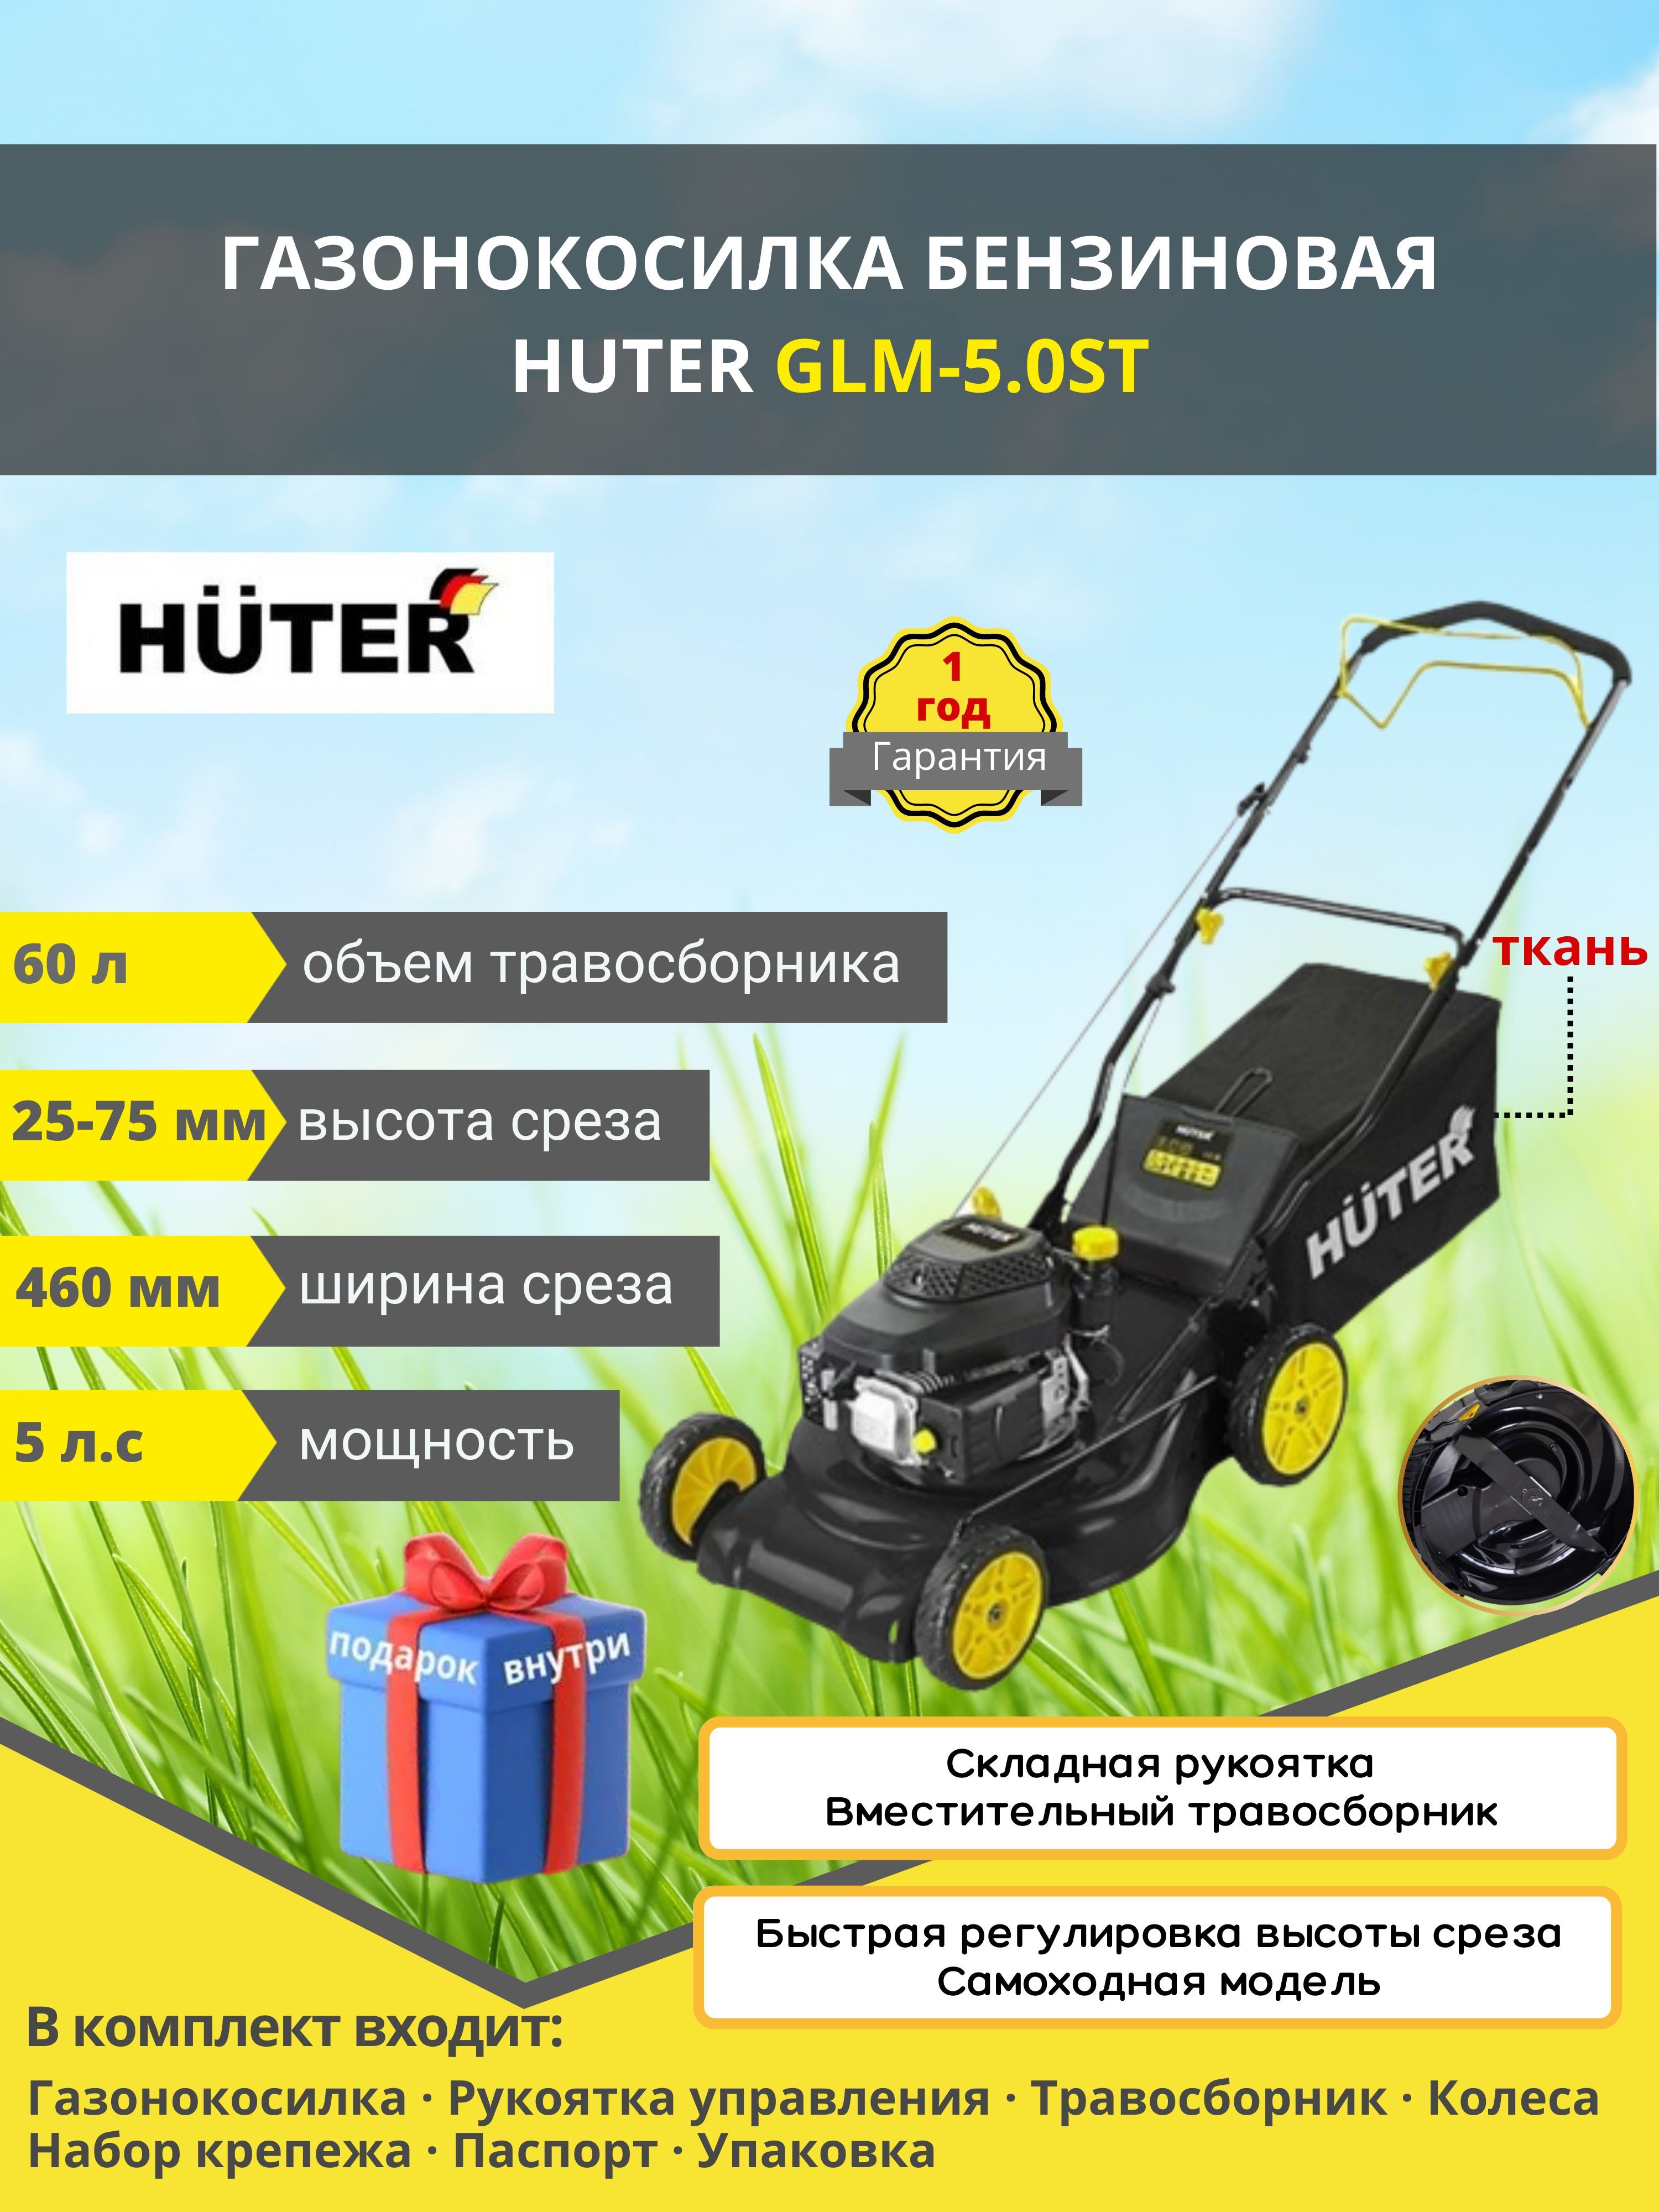 Huter GLM-5.0 St. GLM-5.0 St. Колесо для газонокосилки Huter GLM-5.0St. Huter GLM-5.0 St, 5 л.с., 46 см цены. Газонокосилка бензиновая huter glm 5.0 st